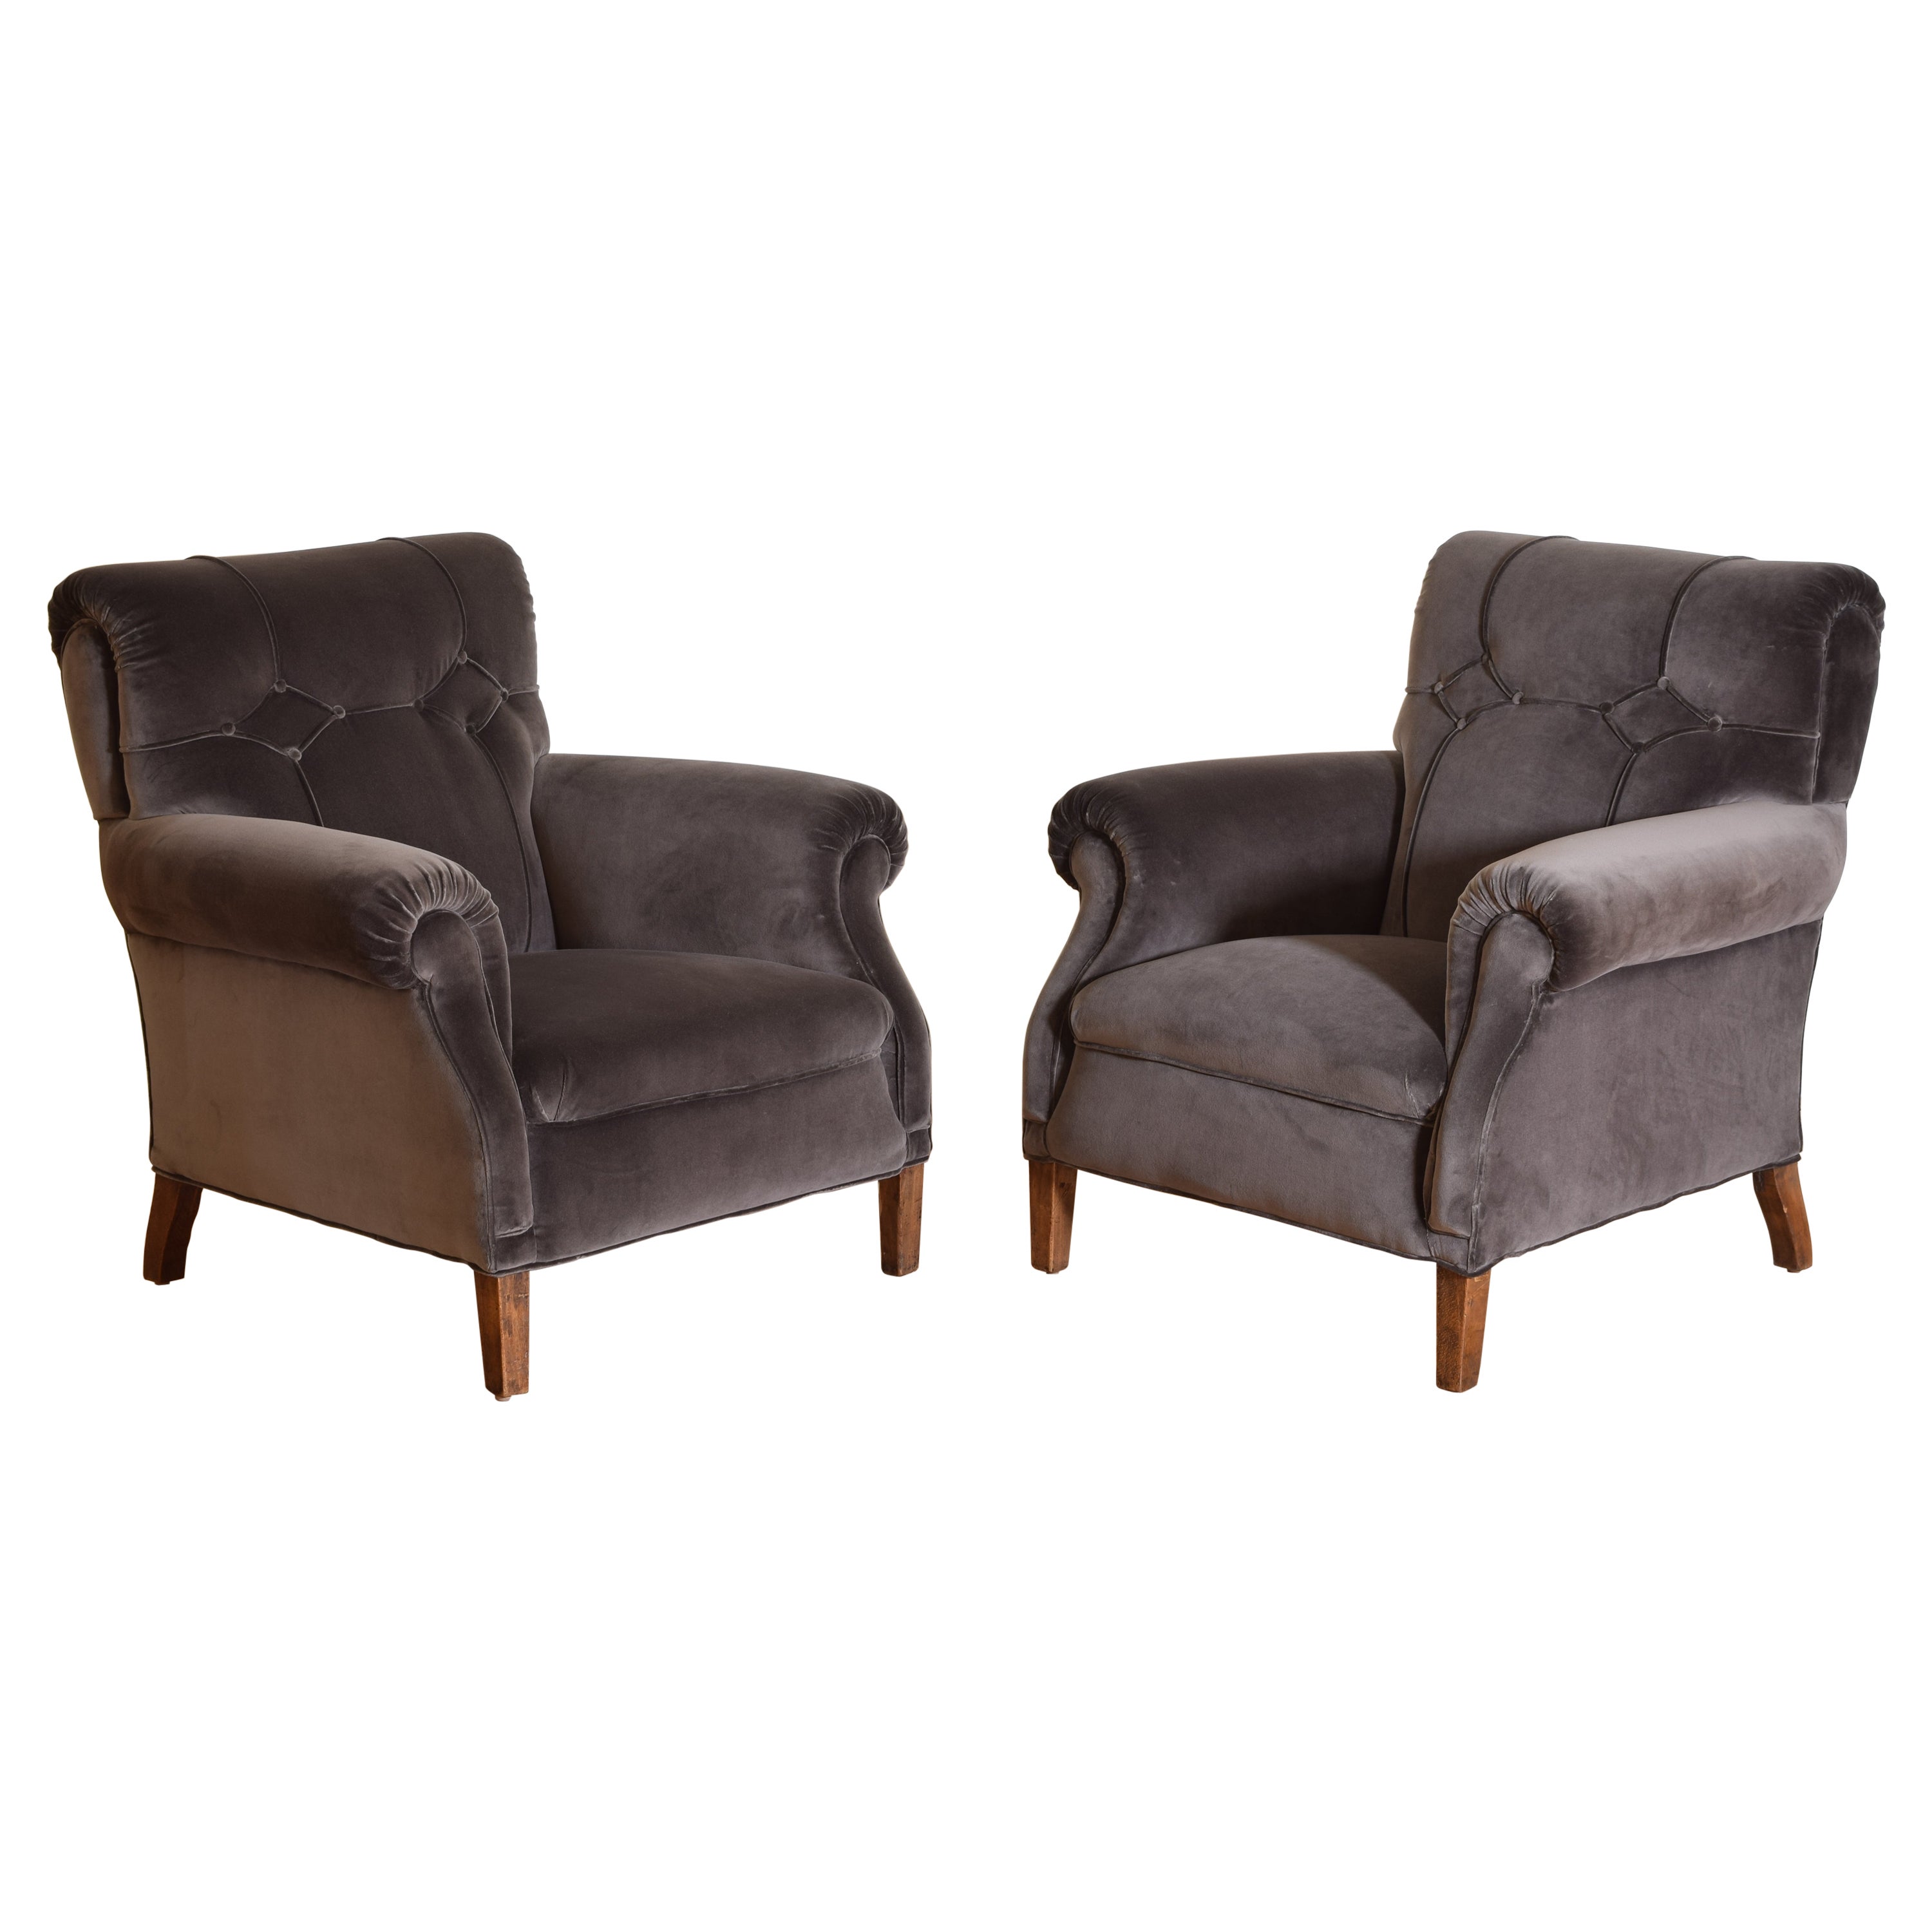 Pair Italian Poltrona Frau Velvet Upholstered Club Chairs, 2ndq 20th Century For Sale